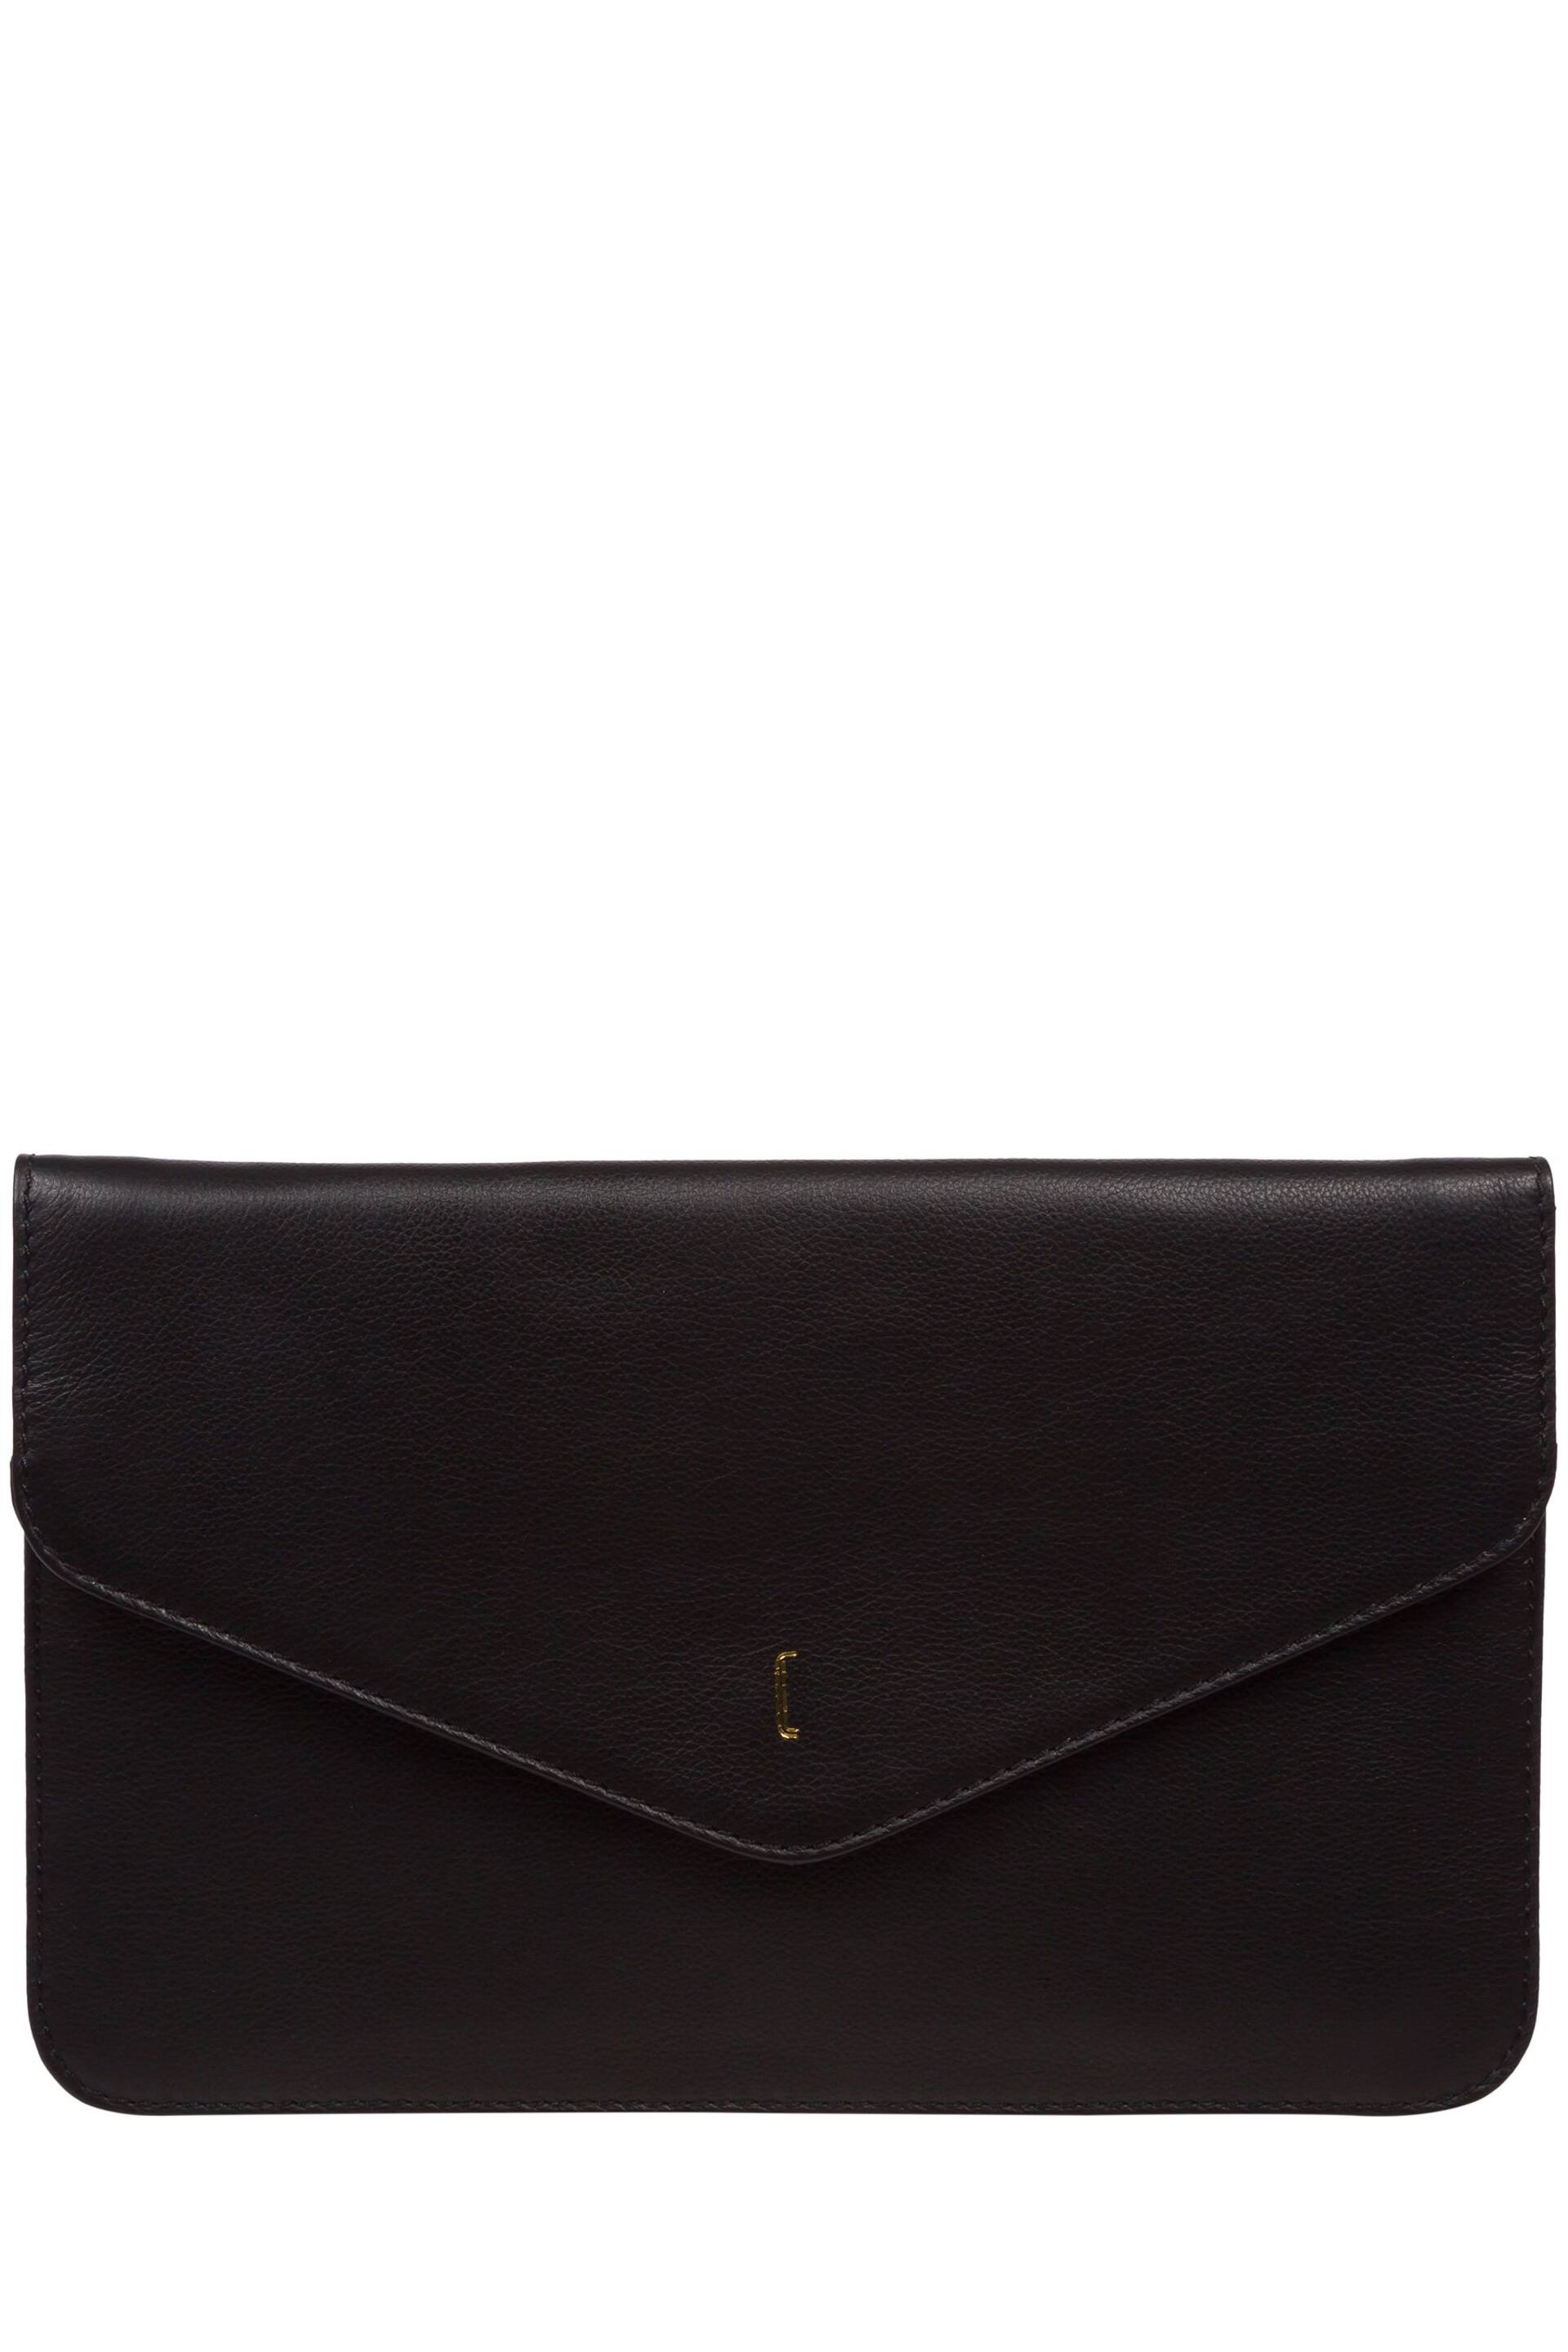 Cultured London Viviane Leather Clutch Bag - Image 1 of 3